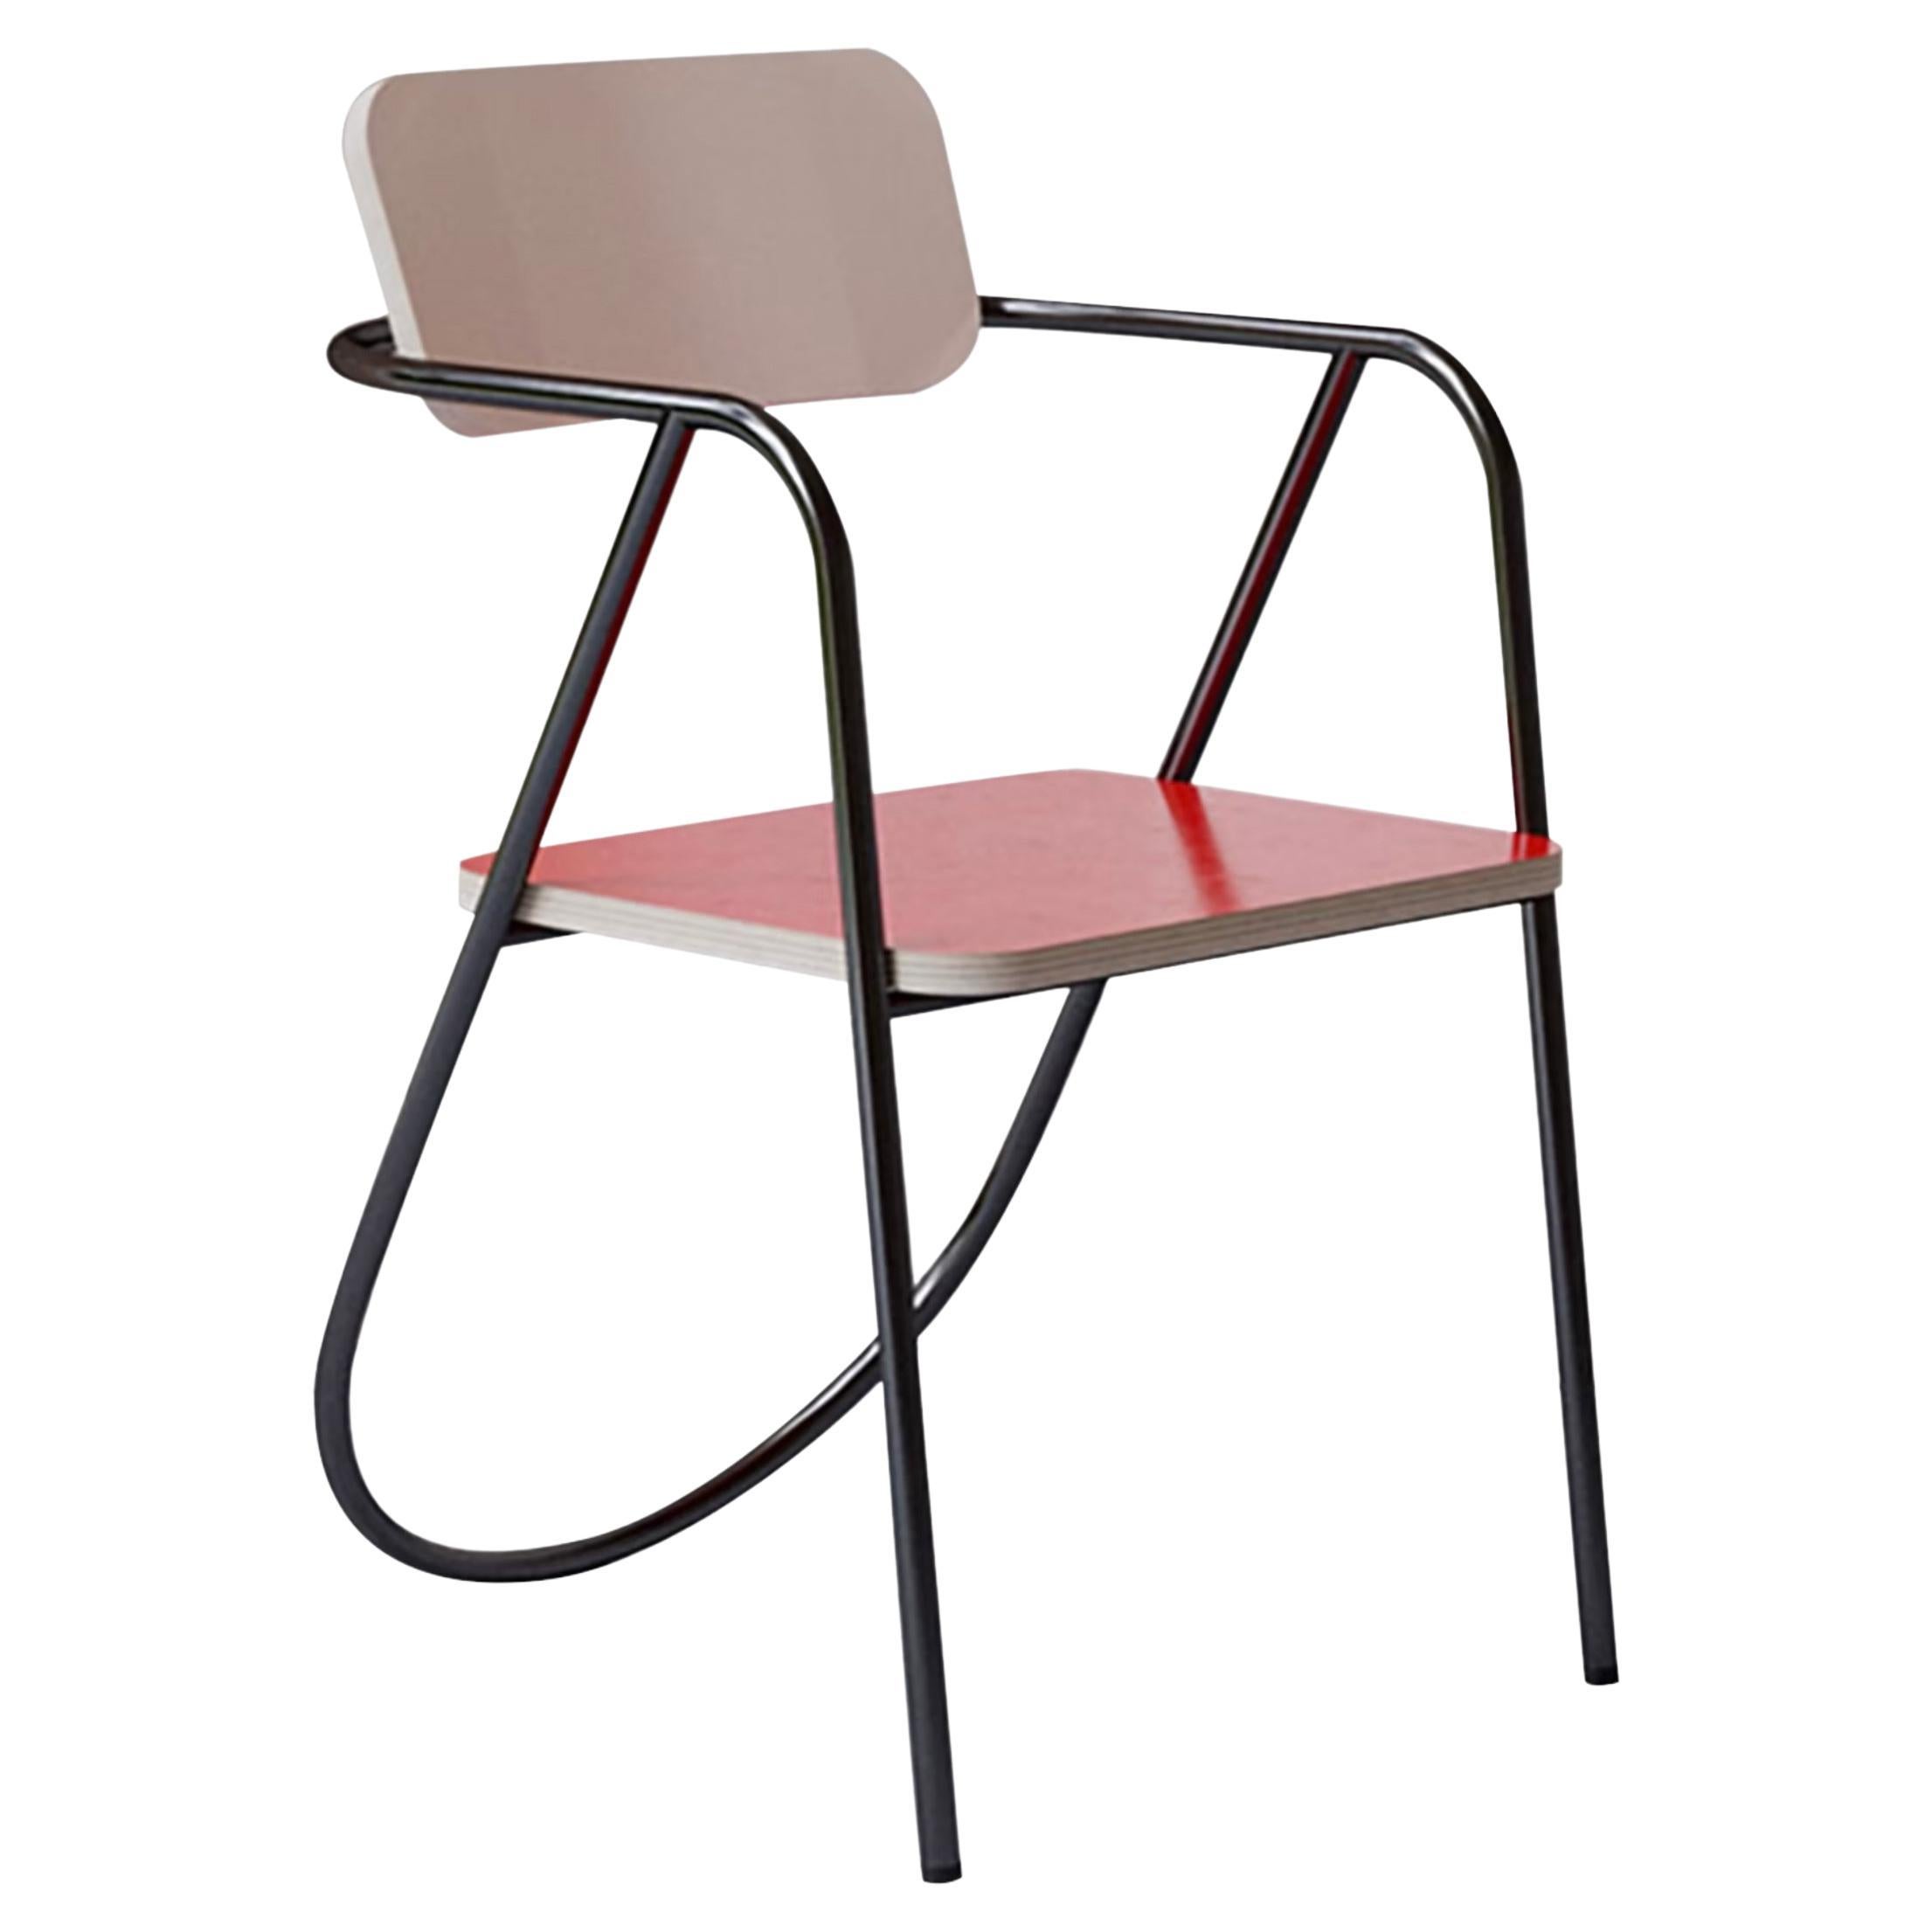 La Misciù Chair, Black, Red and Light Wood